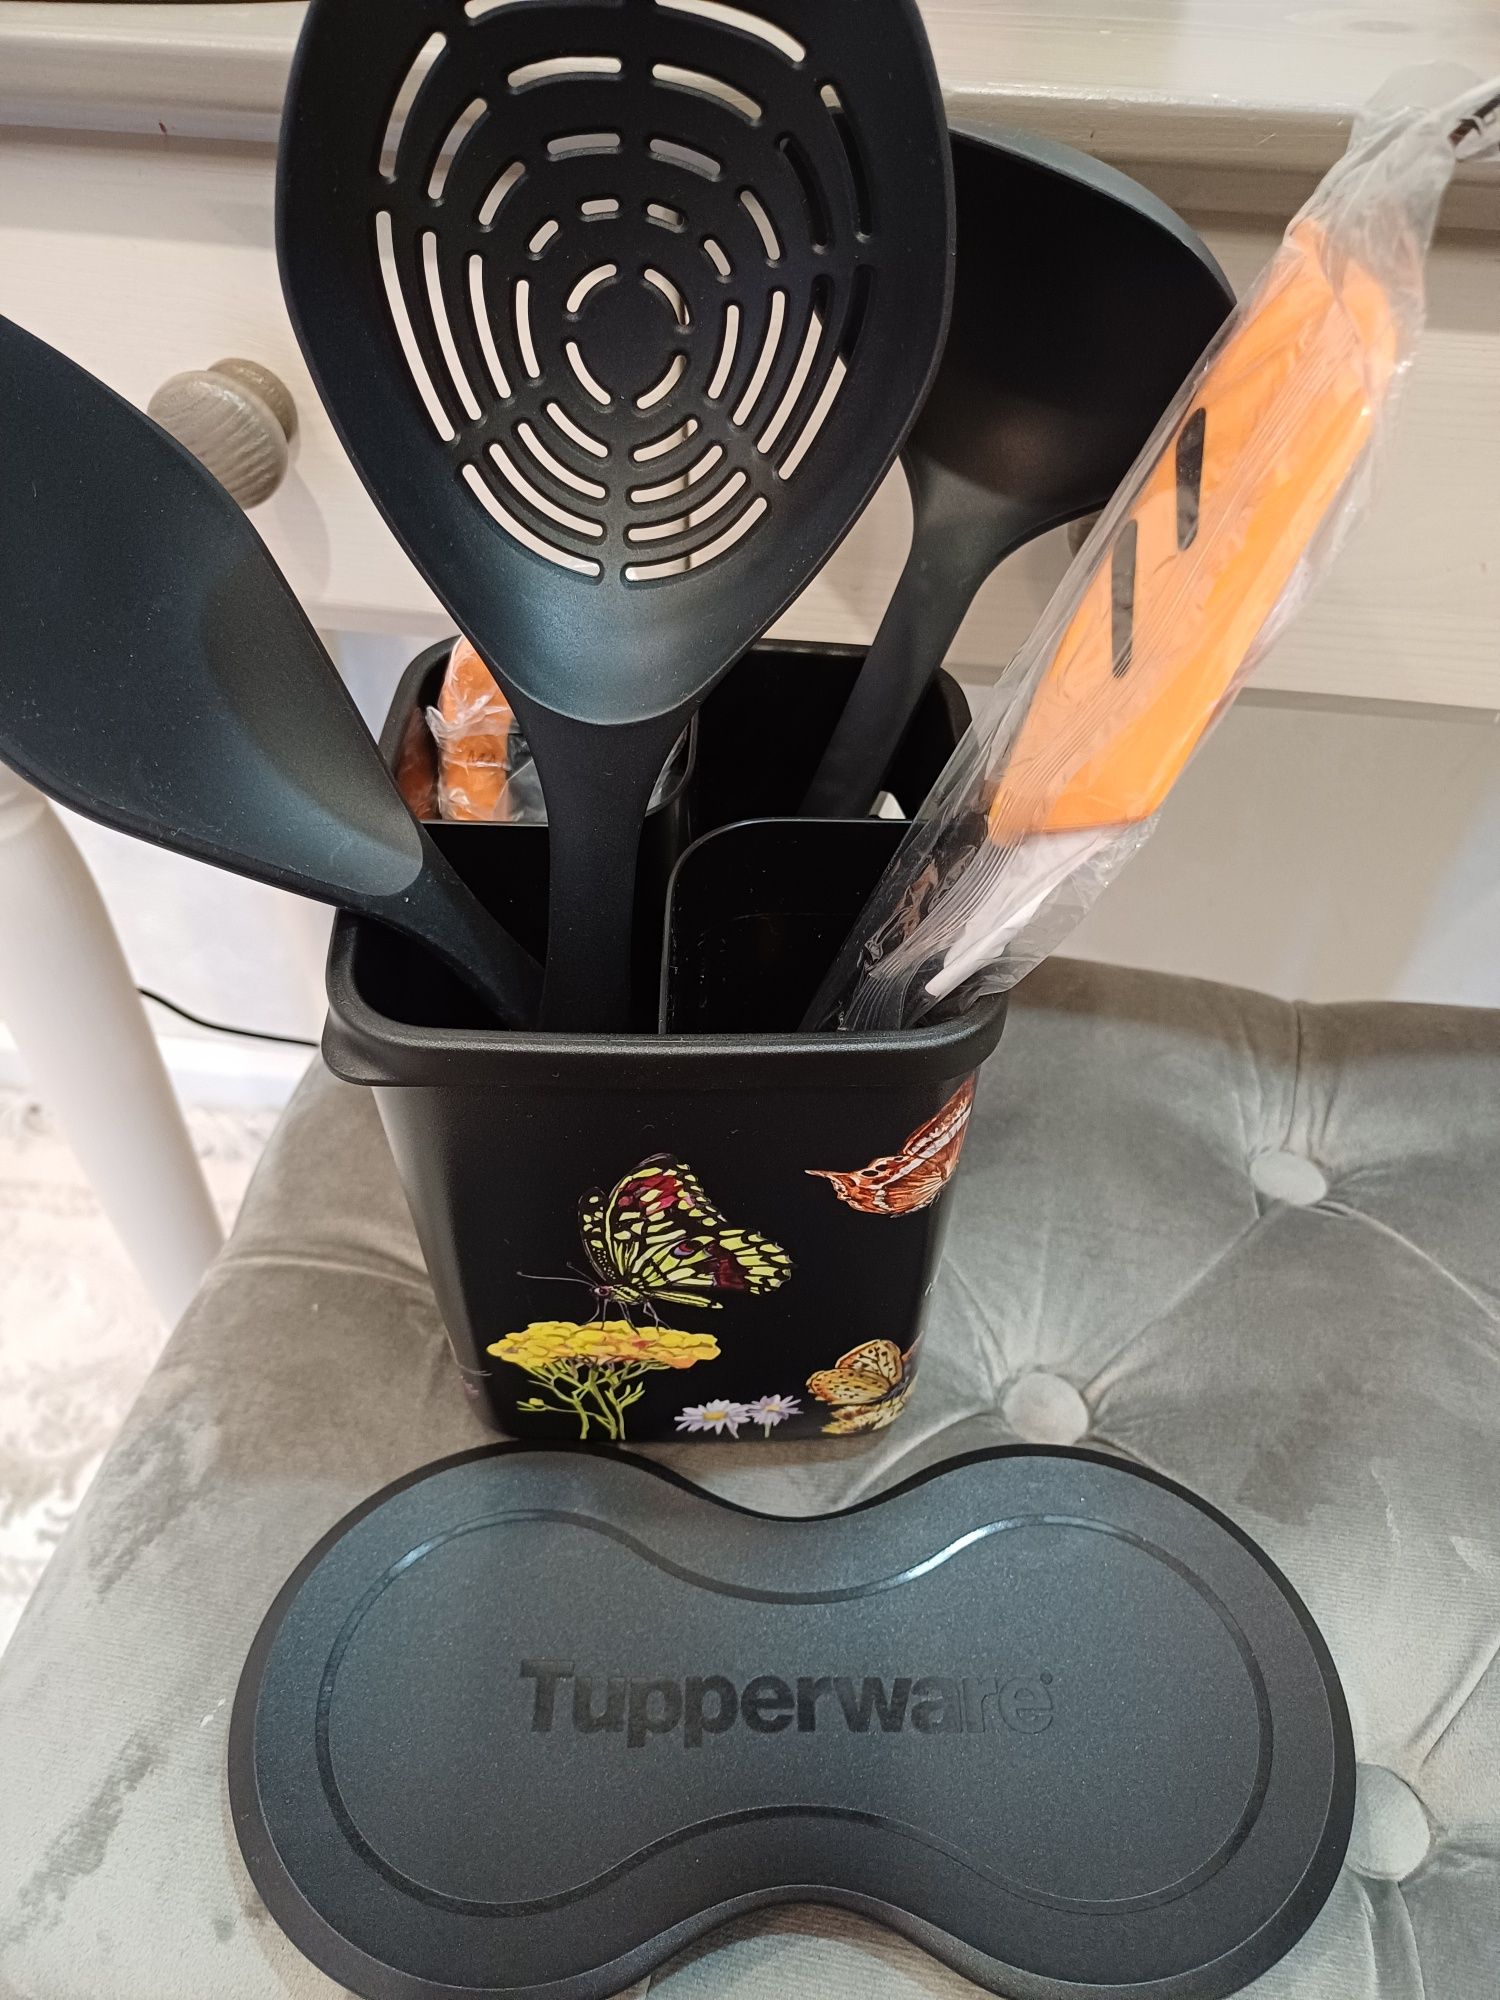 Продам изделия таппервар/Tupperware